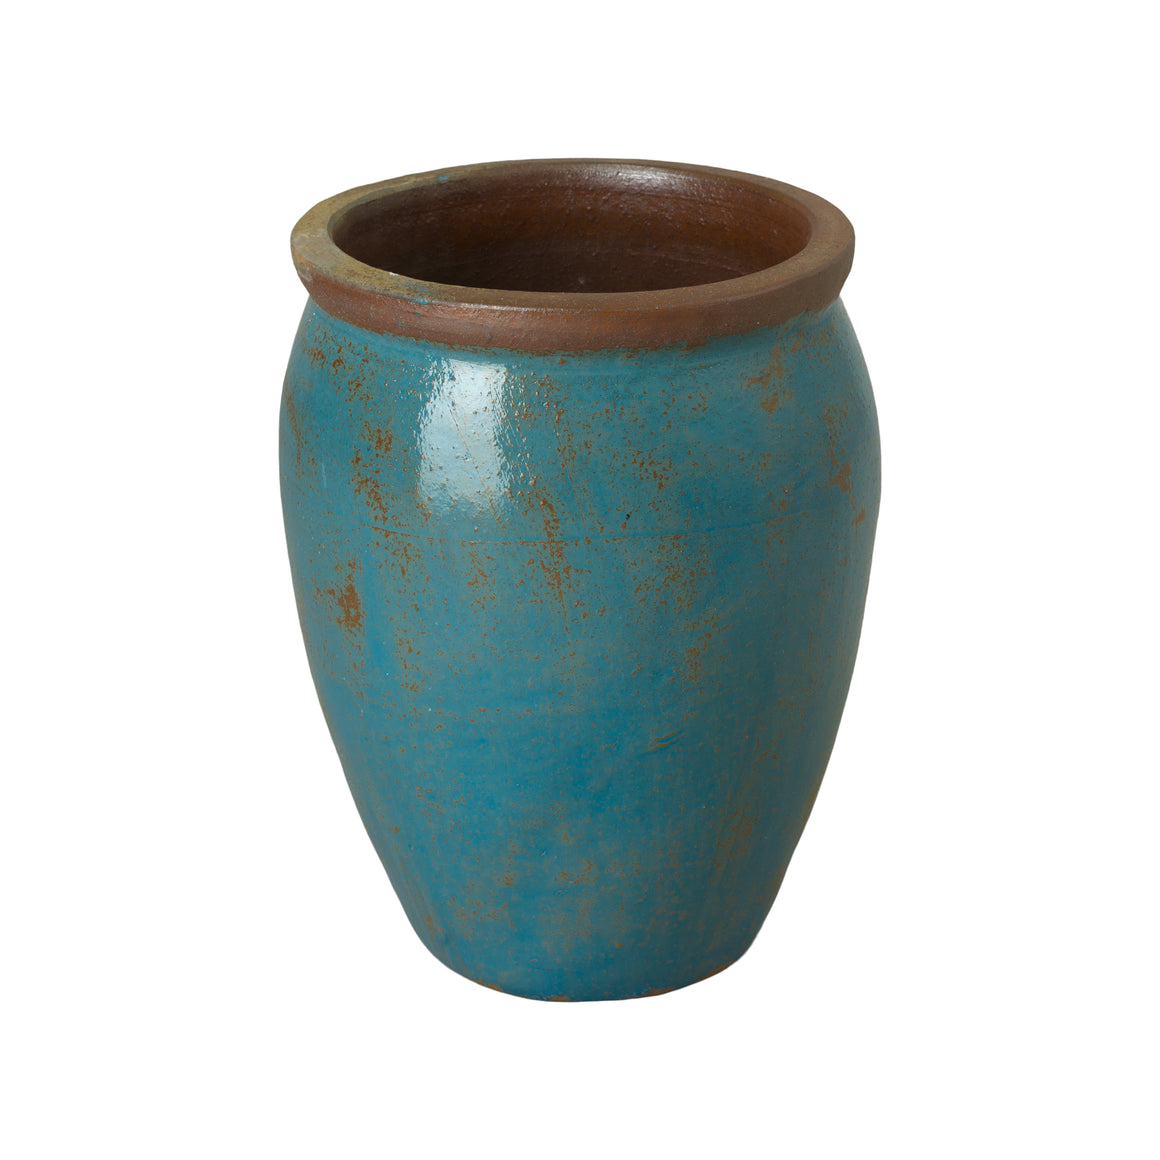 Large Round Ceramic Planter - Rustic Turquoise Glaze